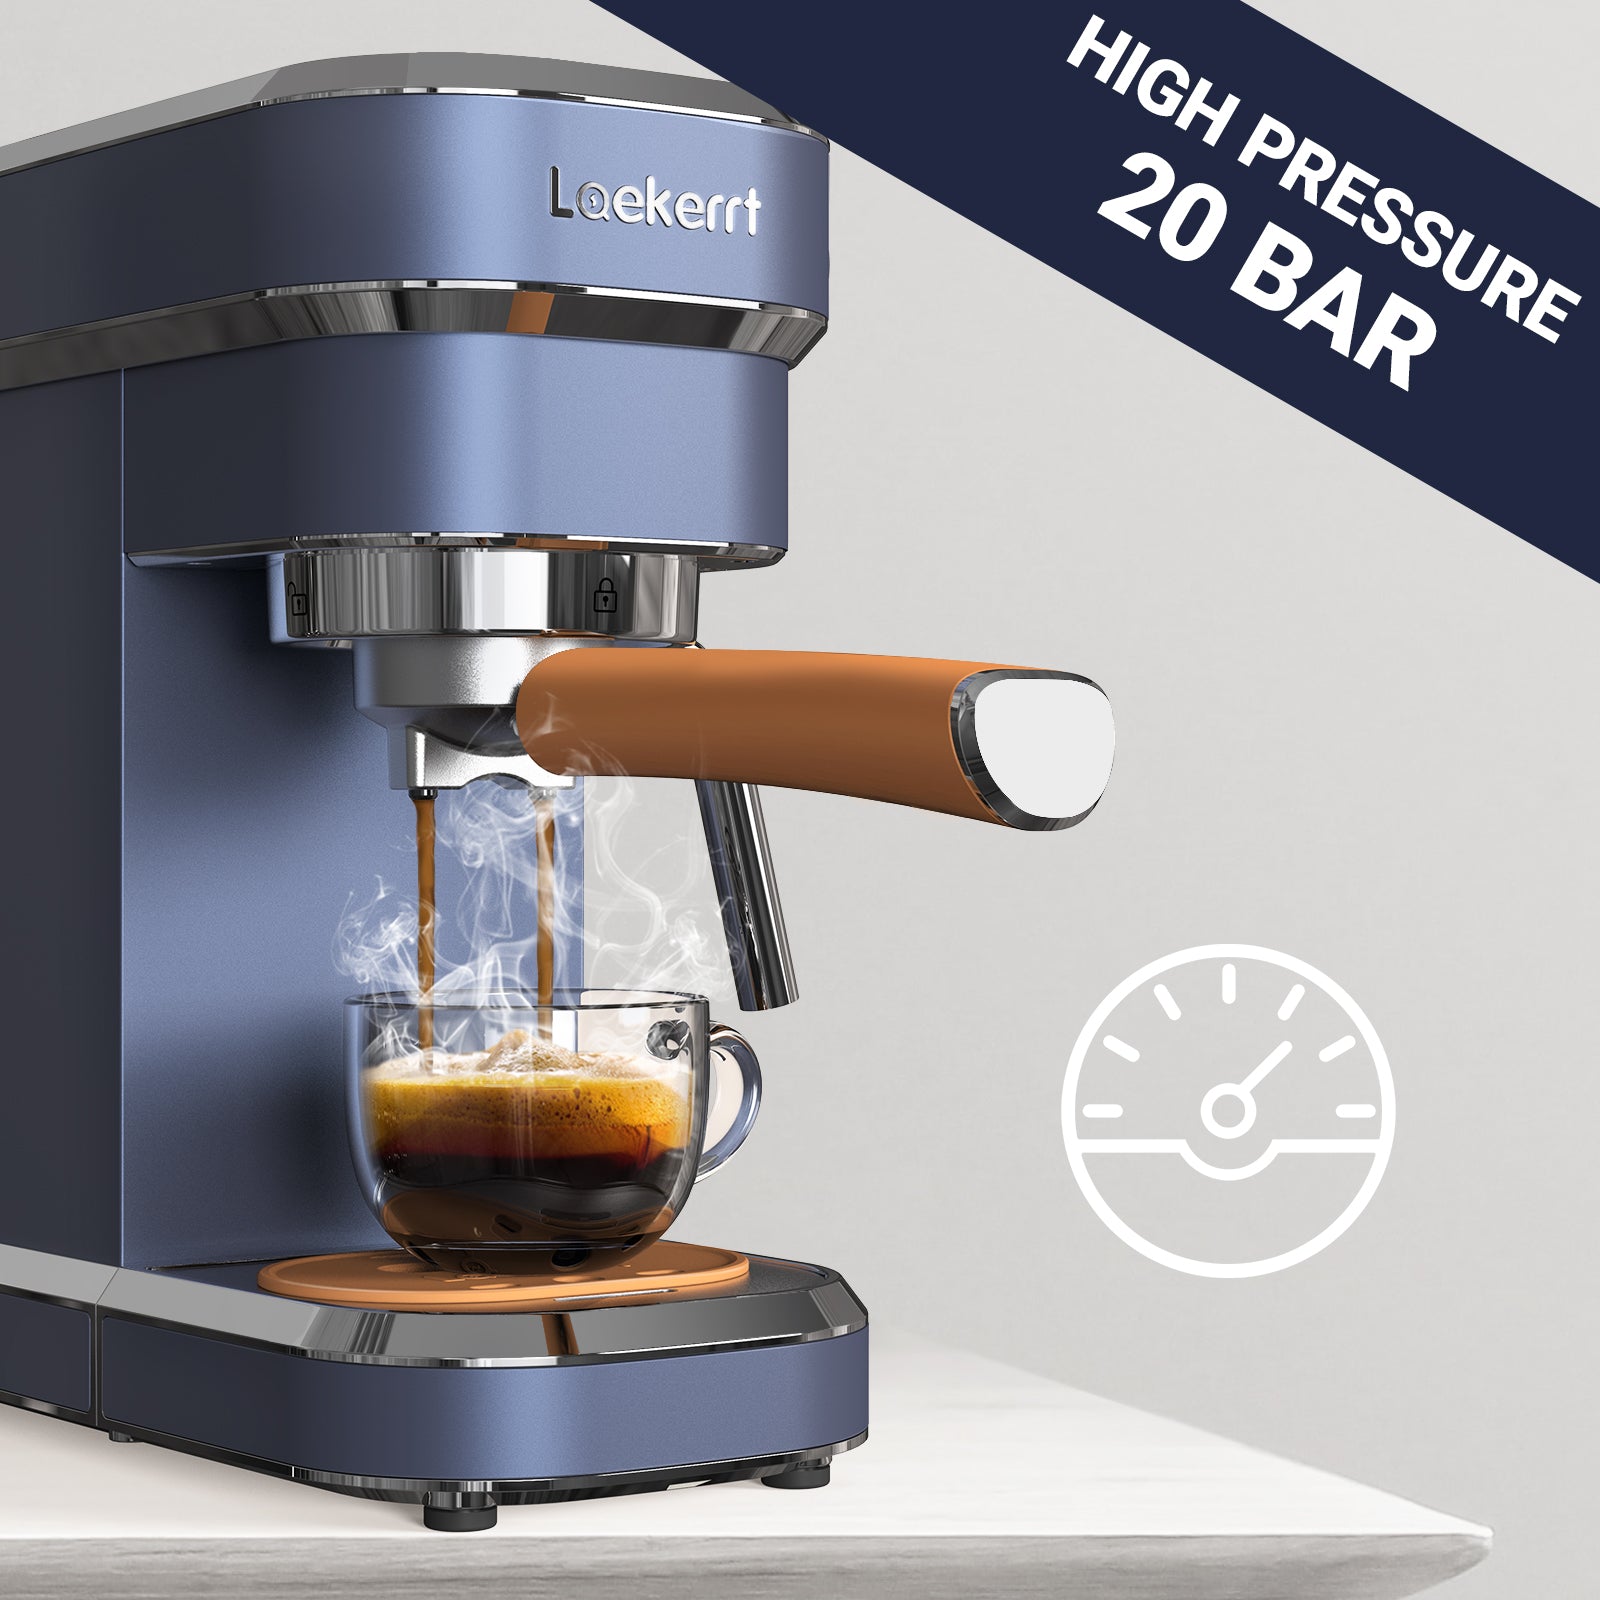 CAVDLE Espresso Machine 20 Bar, Professional Espresso Maker with